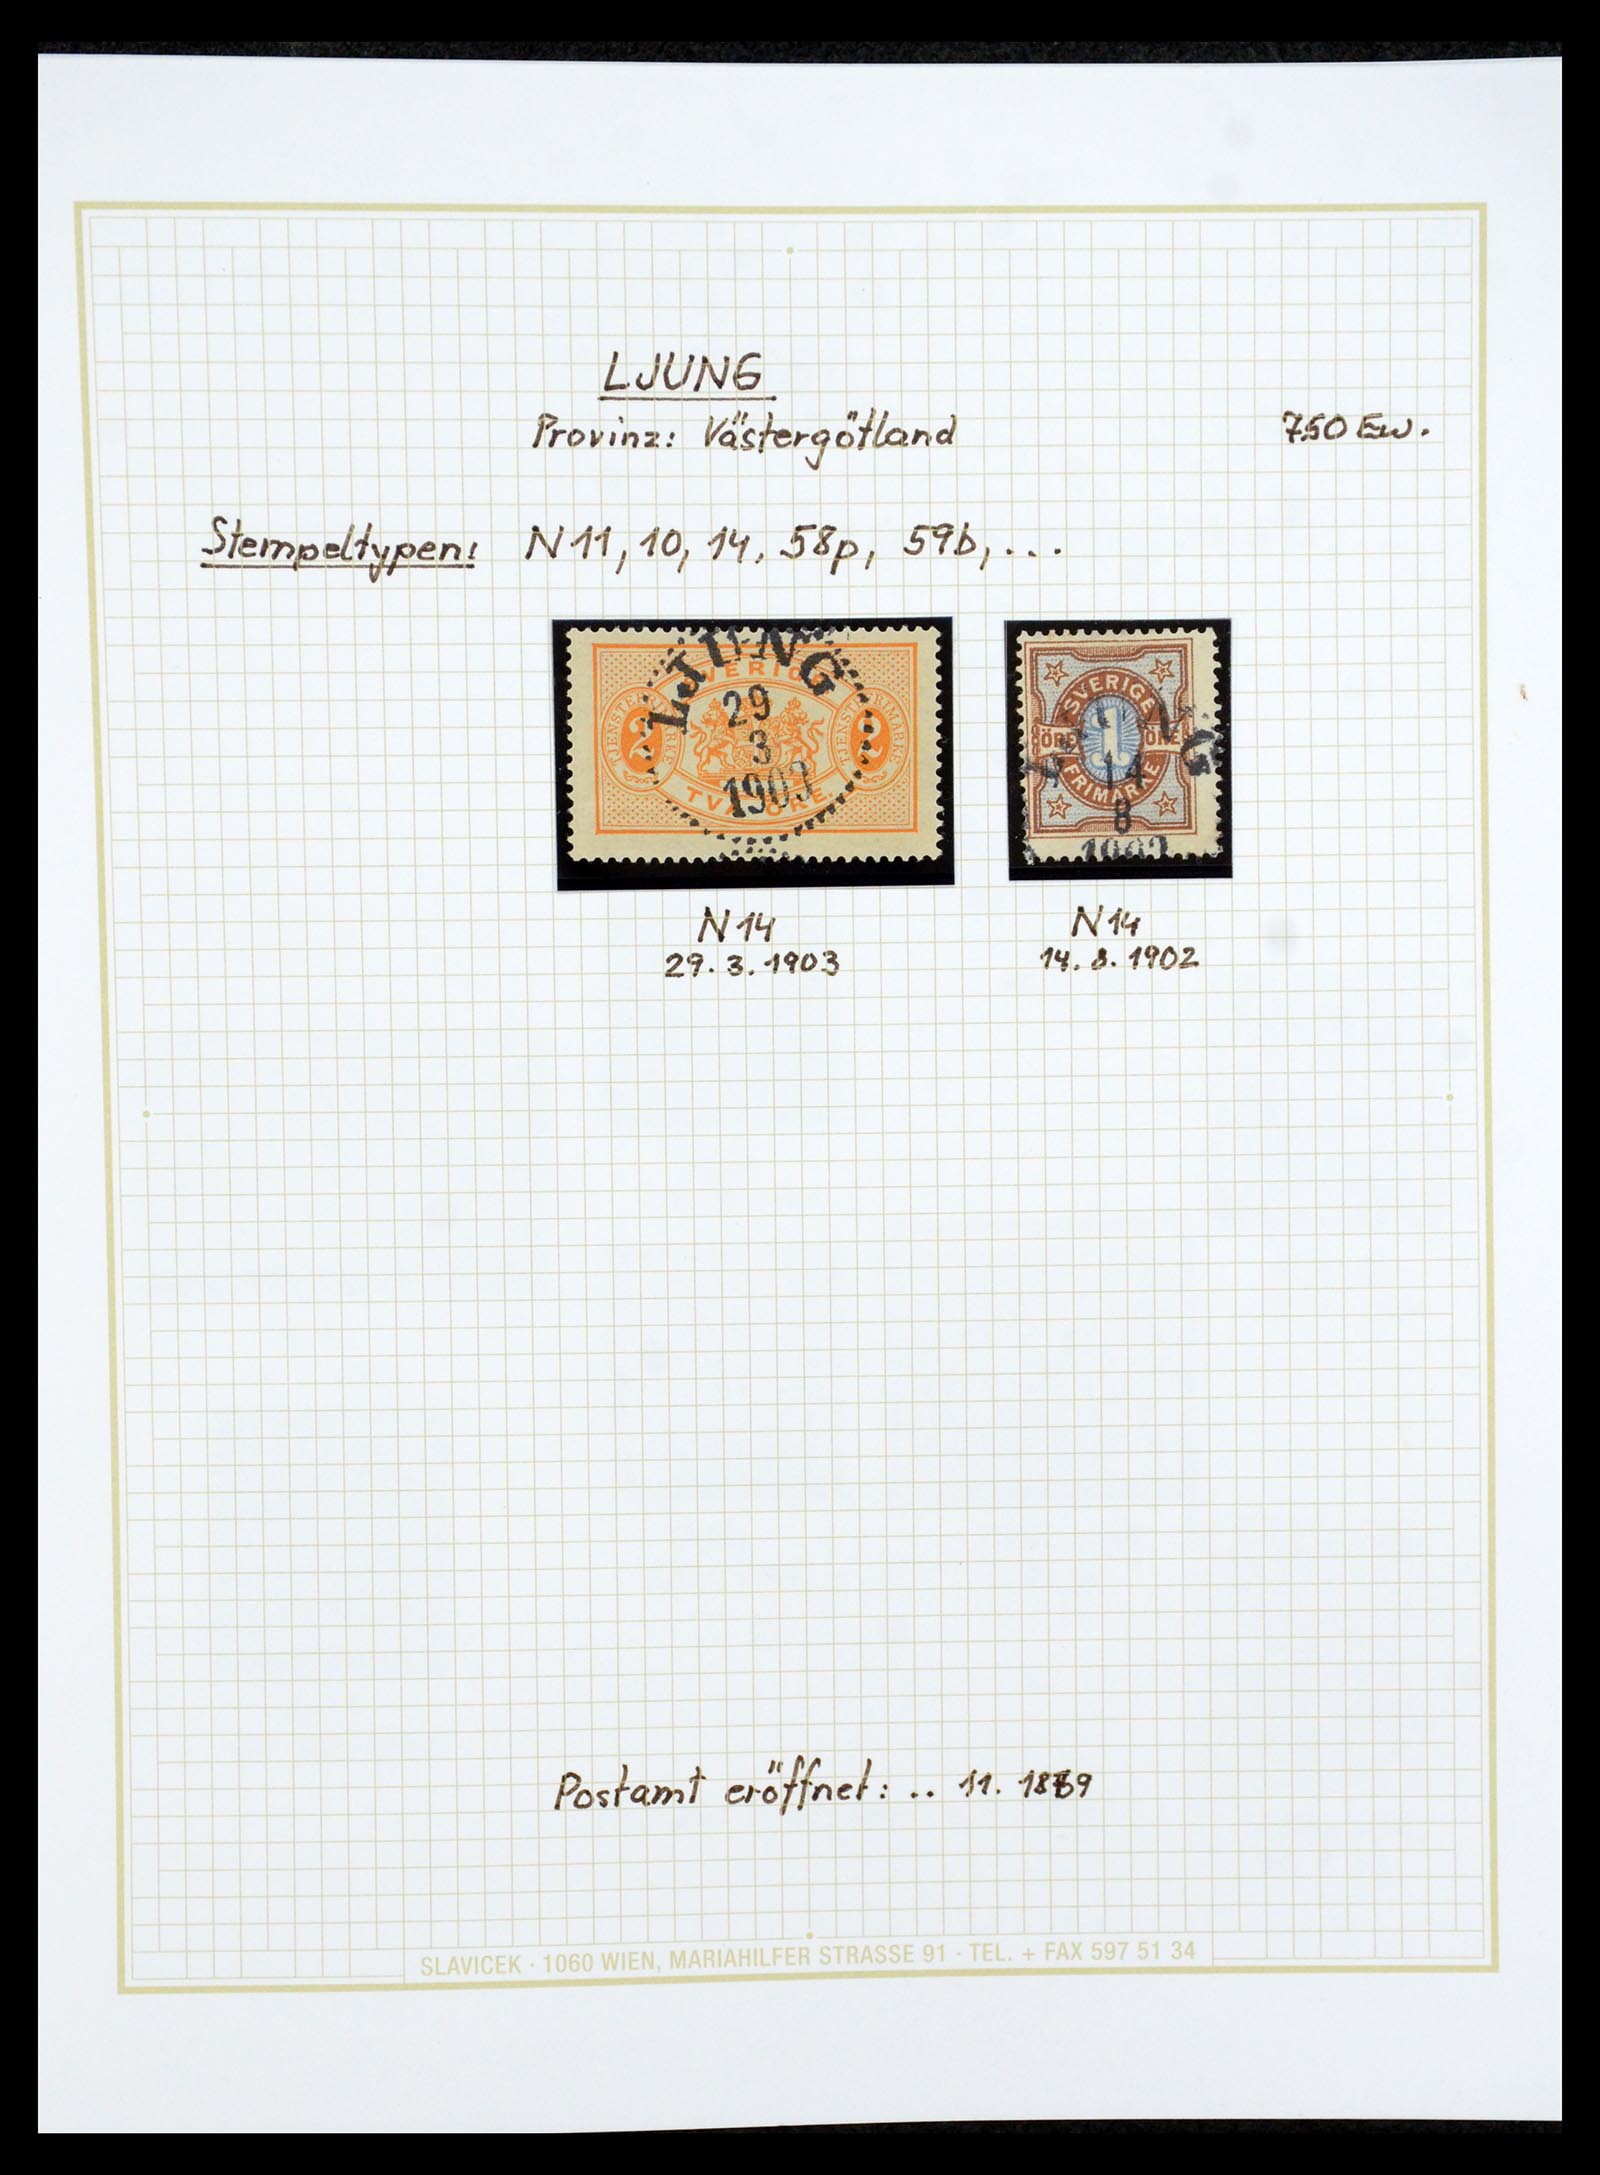 36259 040 - Stamp collection 36259 Sweden cancels 1858-1950.